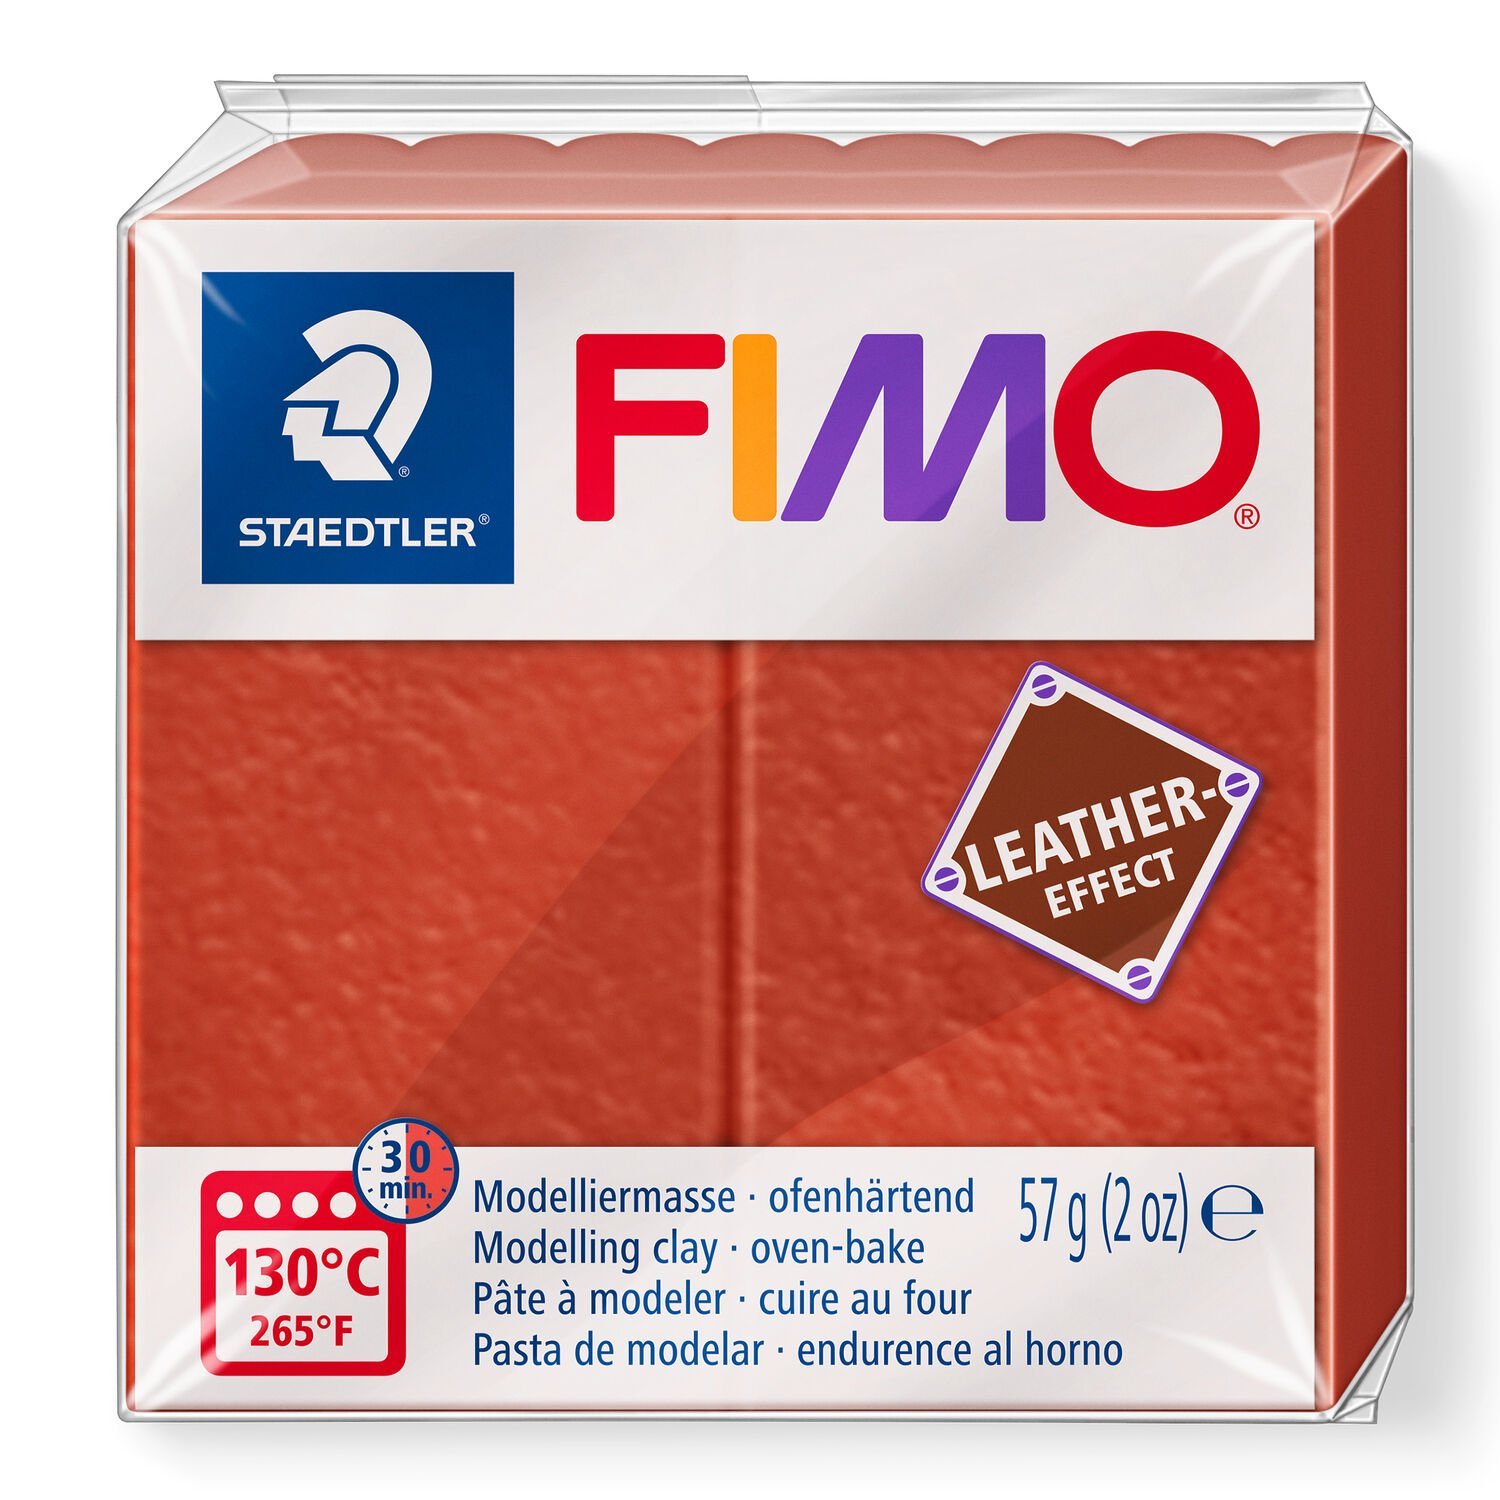 FIMO® leather-effect 8010 - Pasta de modelar de endurecimiento al horno